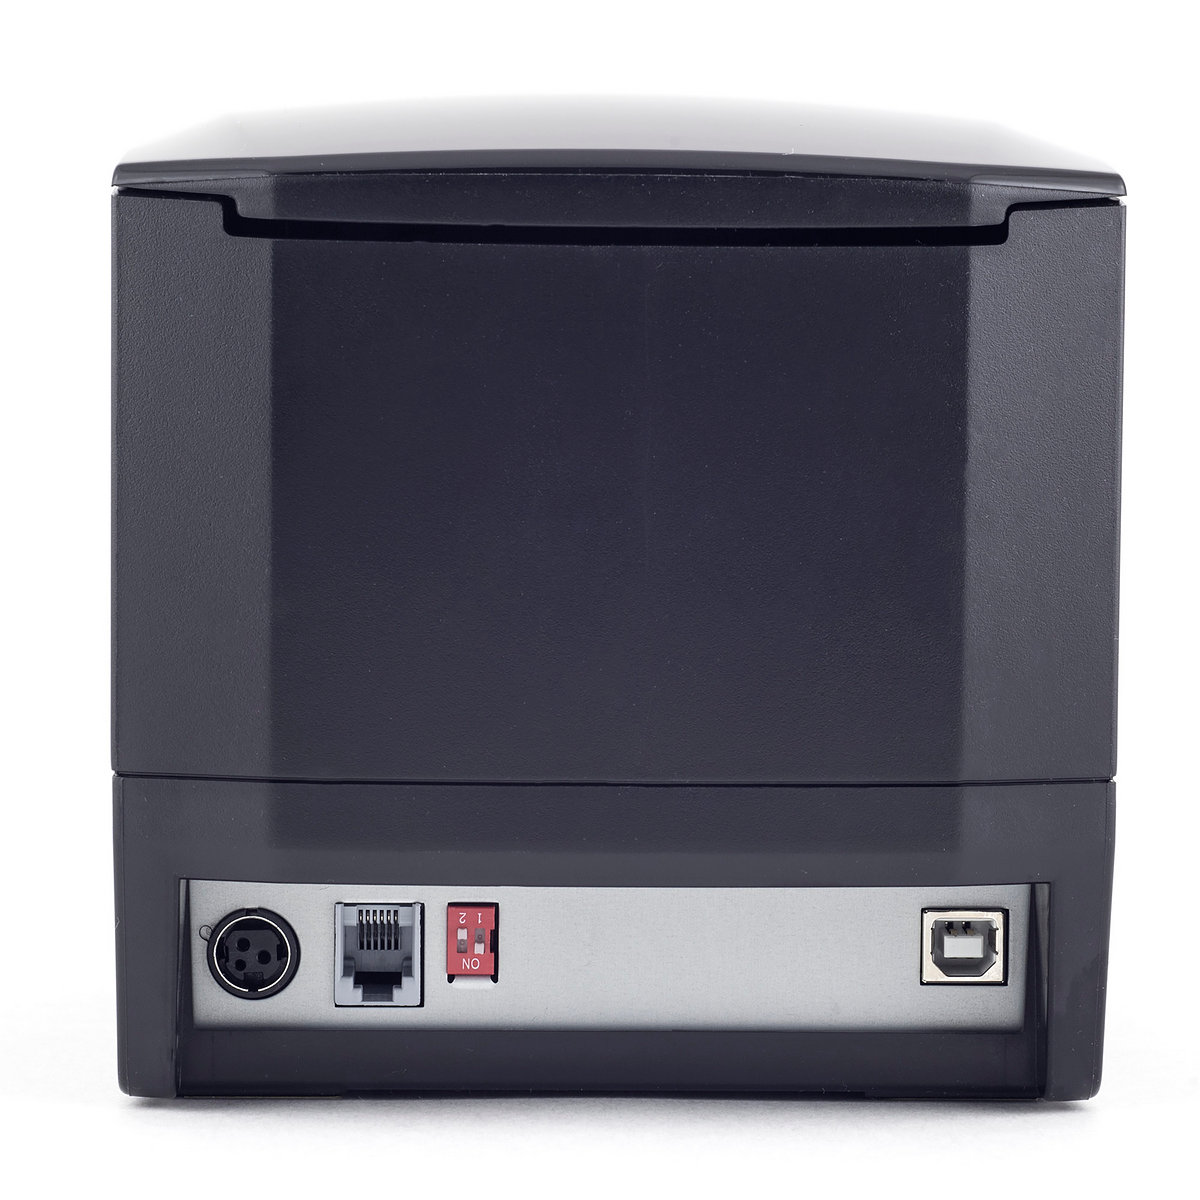 Термопринтер этикеток Xprinter XP-365B, 203 dрi, USB НФ-00000821